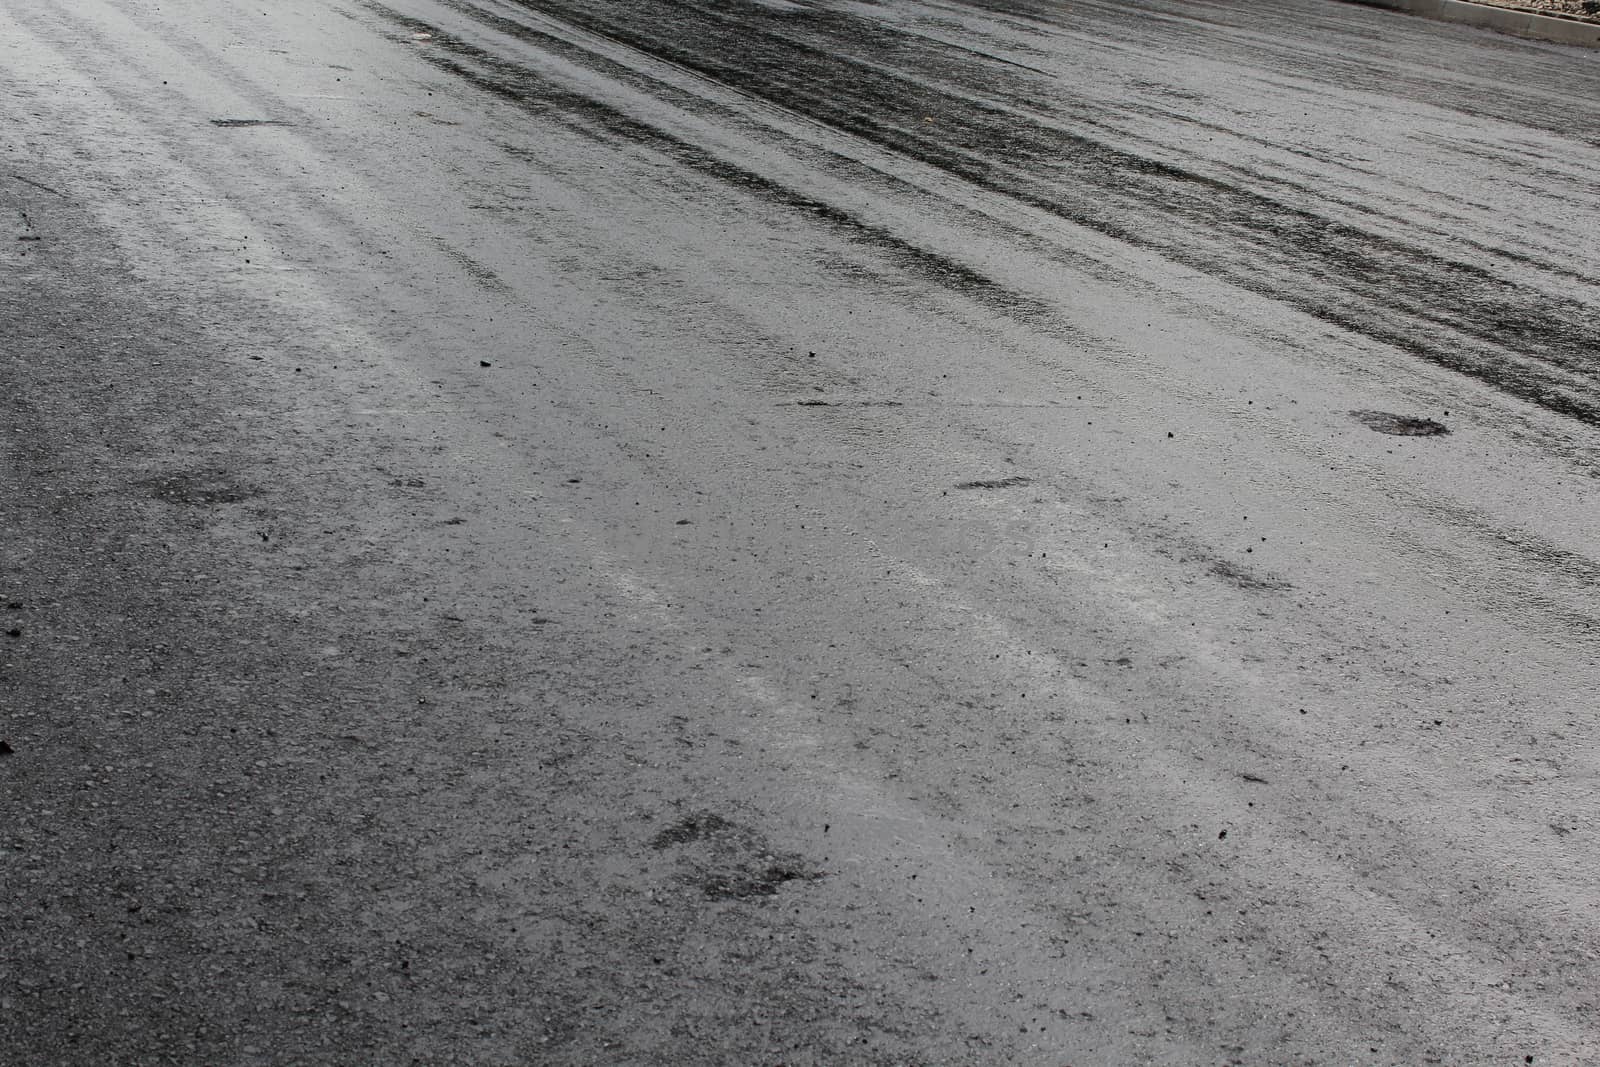 Freshly laid black tar asphalt pavement by nurjan100